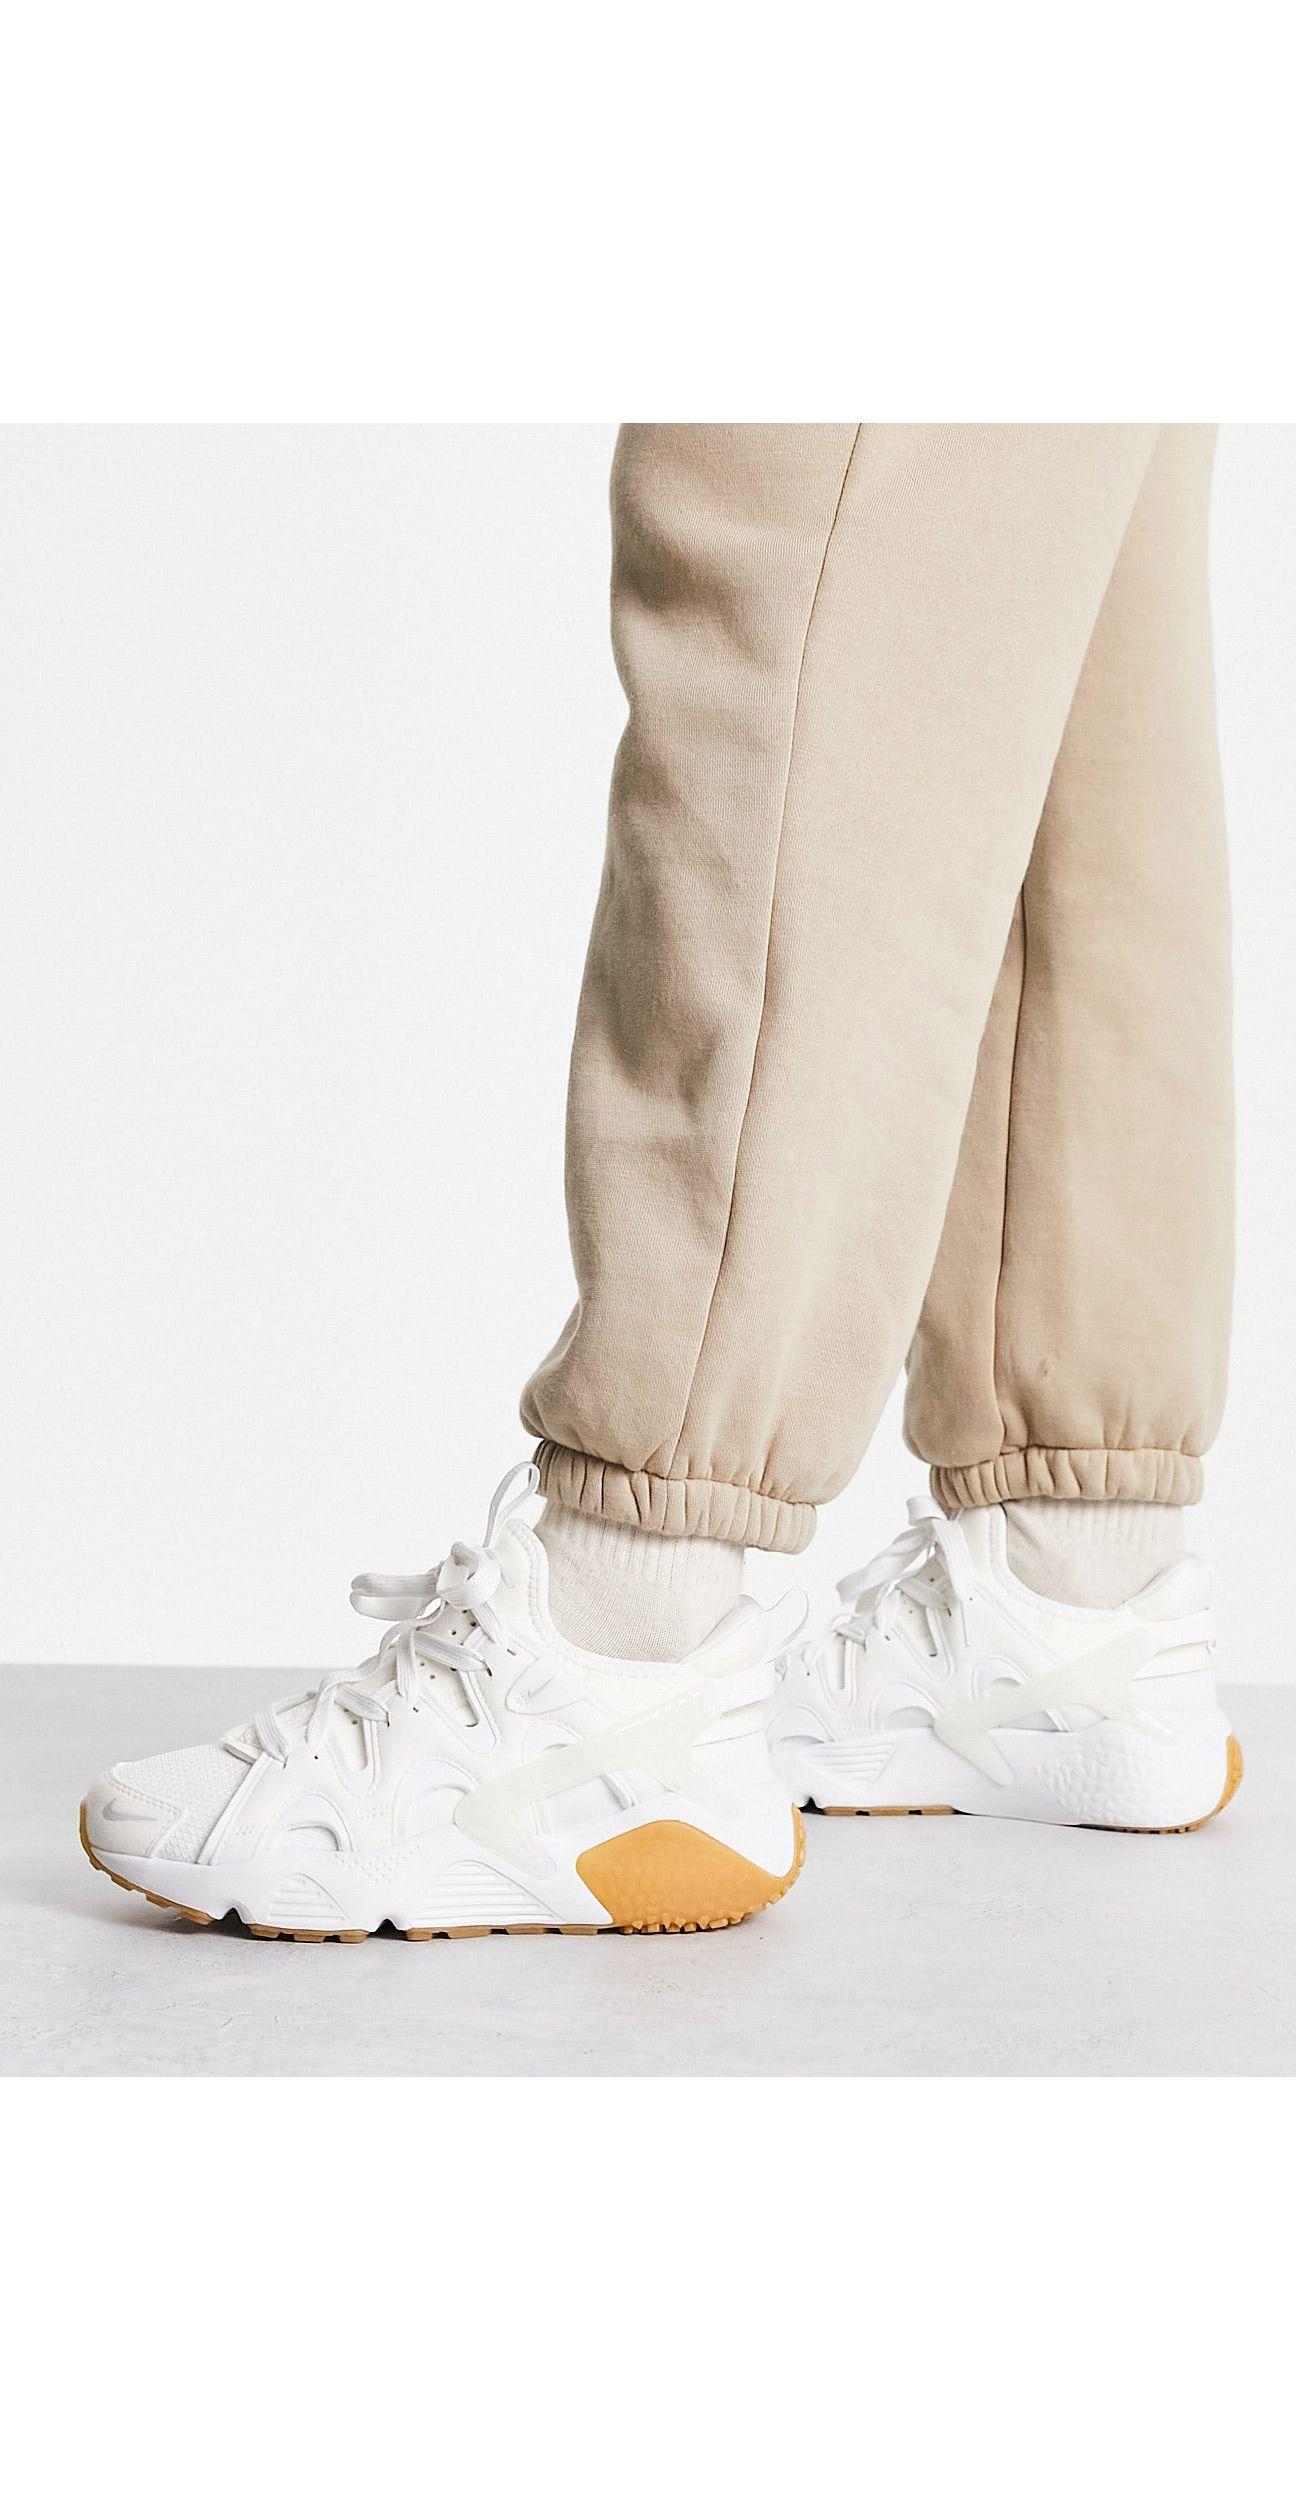 Nike Air Huarache Craft Sneakers in White | Lyst